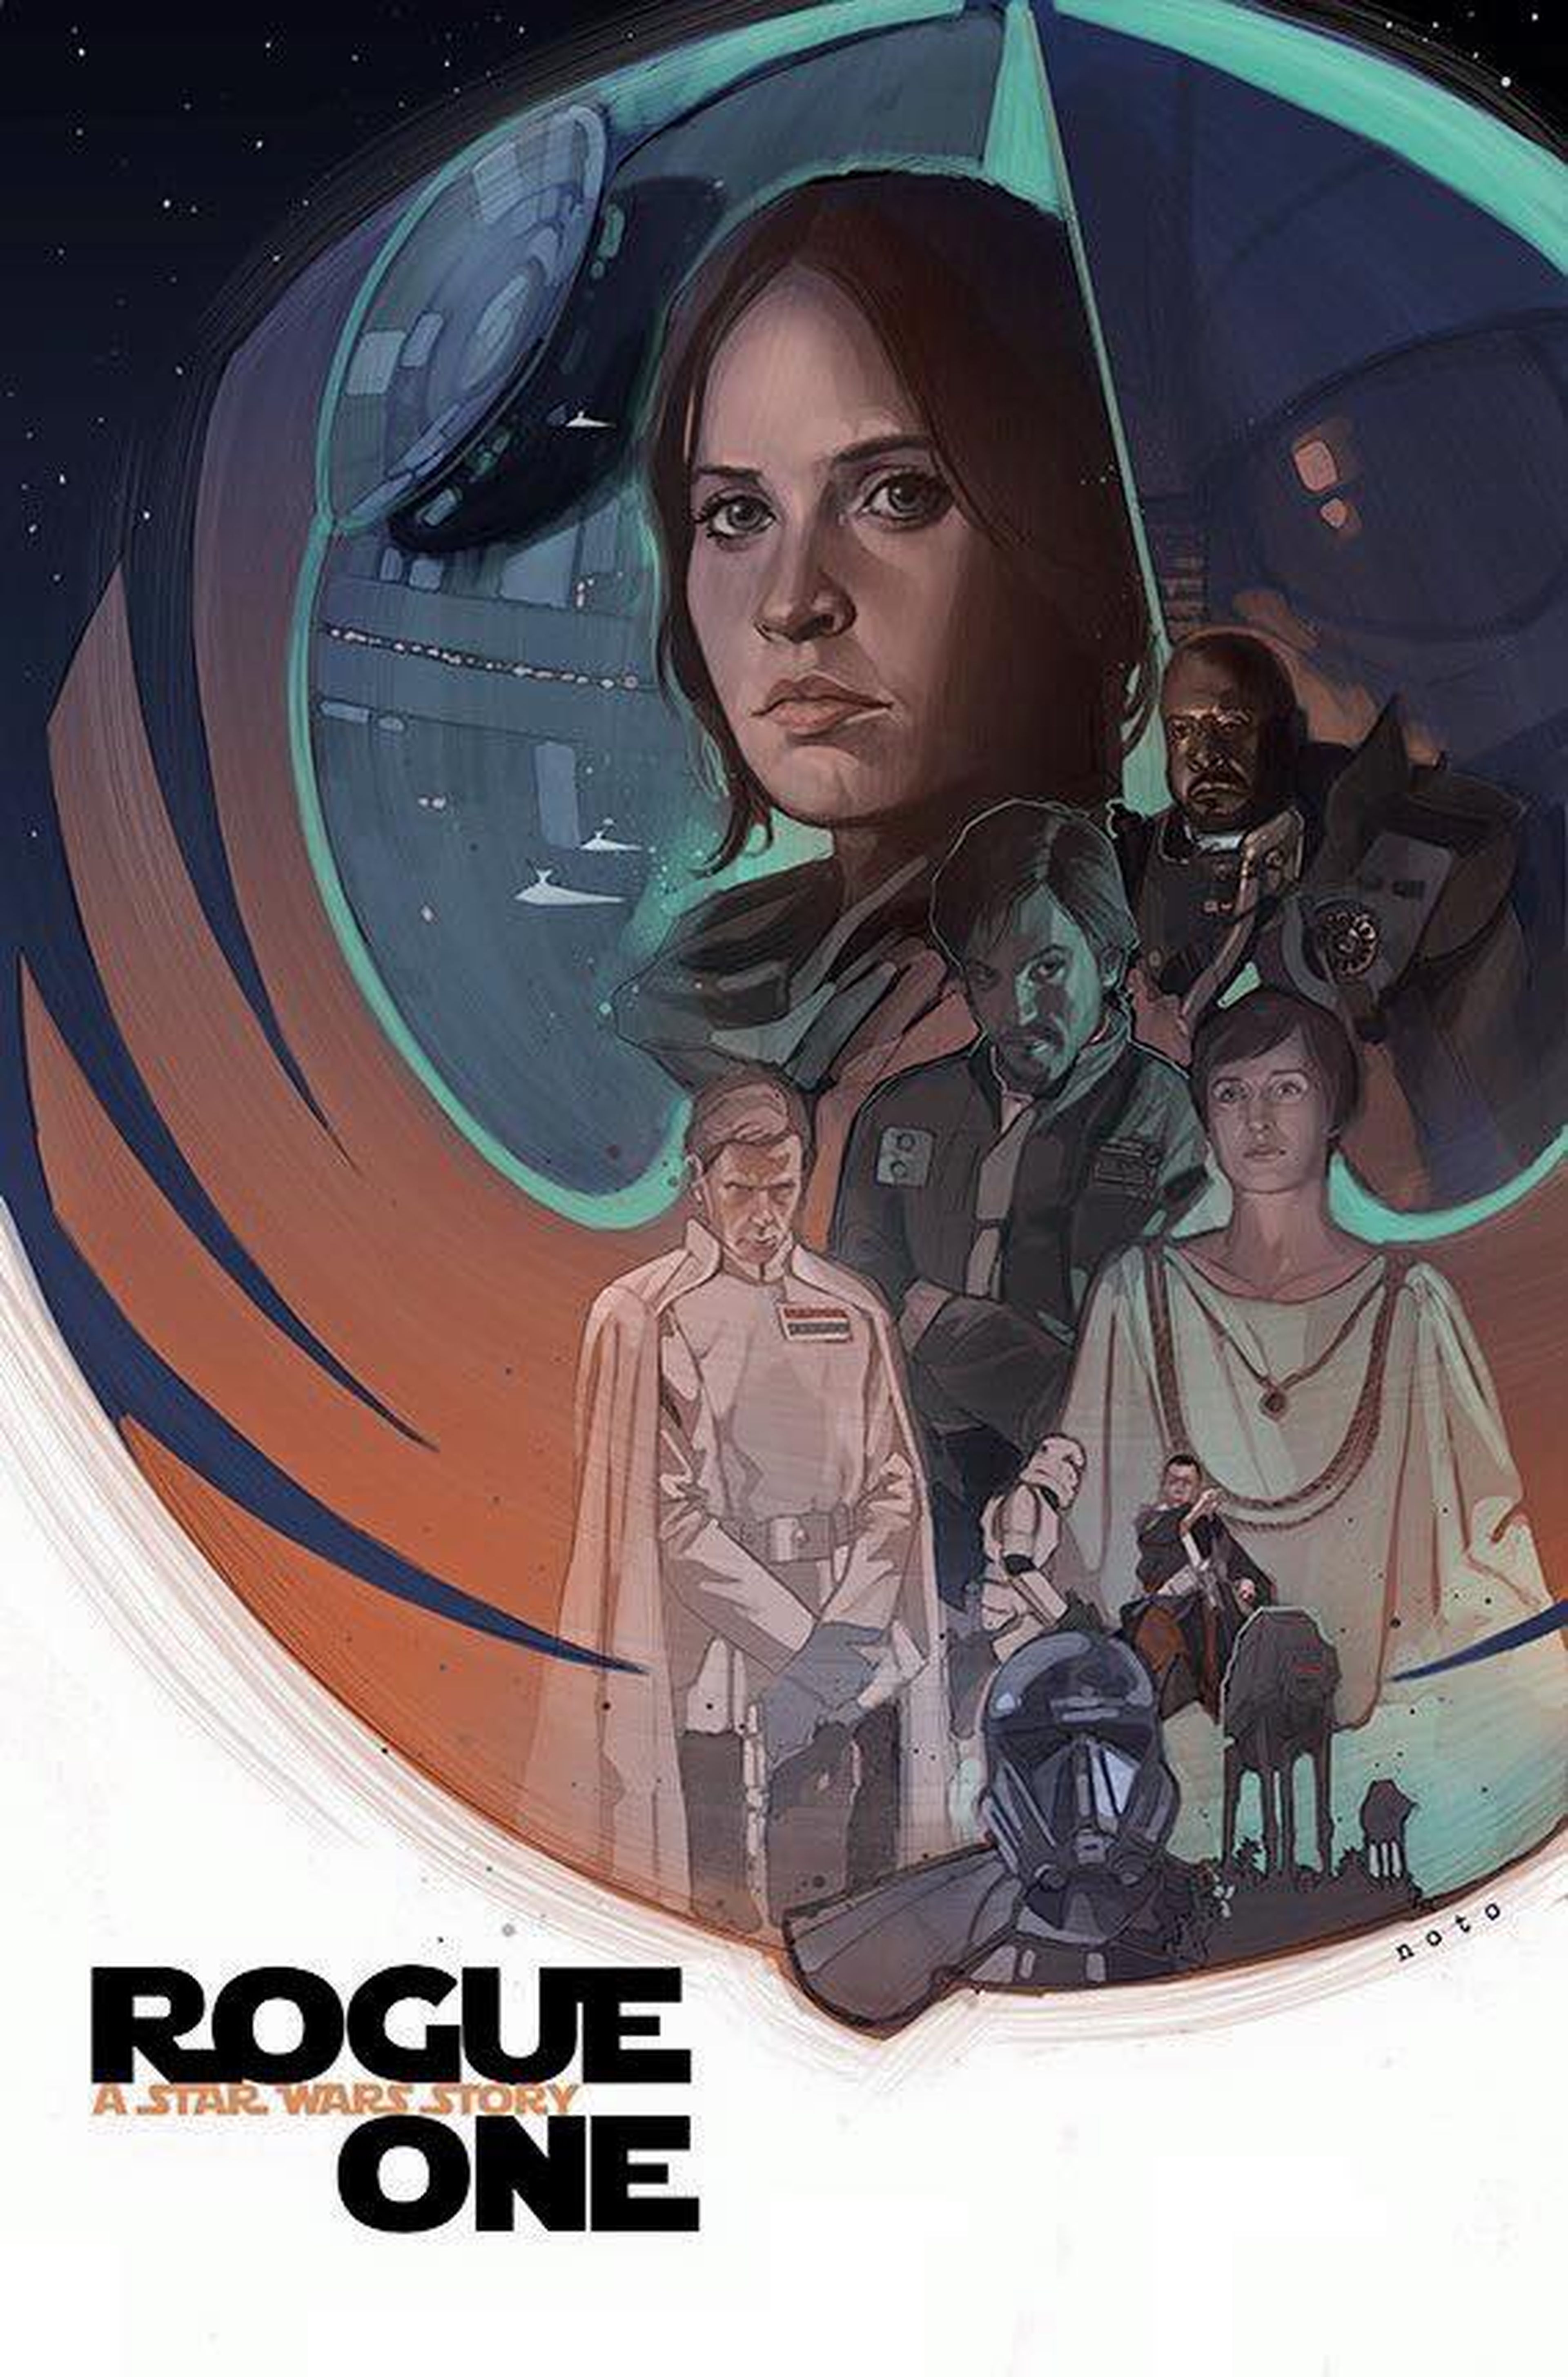 Star Wars Rogue One: Poster de Phil Noto (Chewbacca, Poe Dameron)